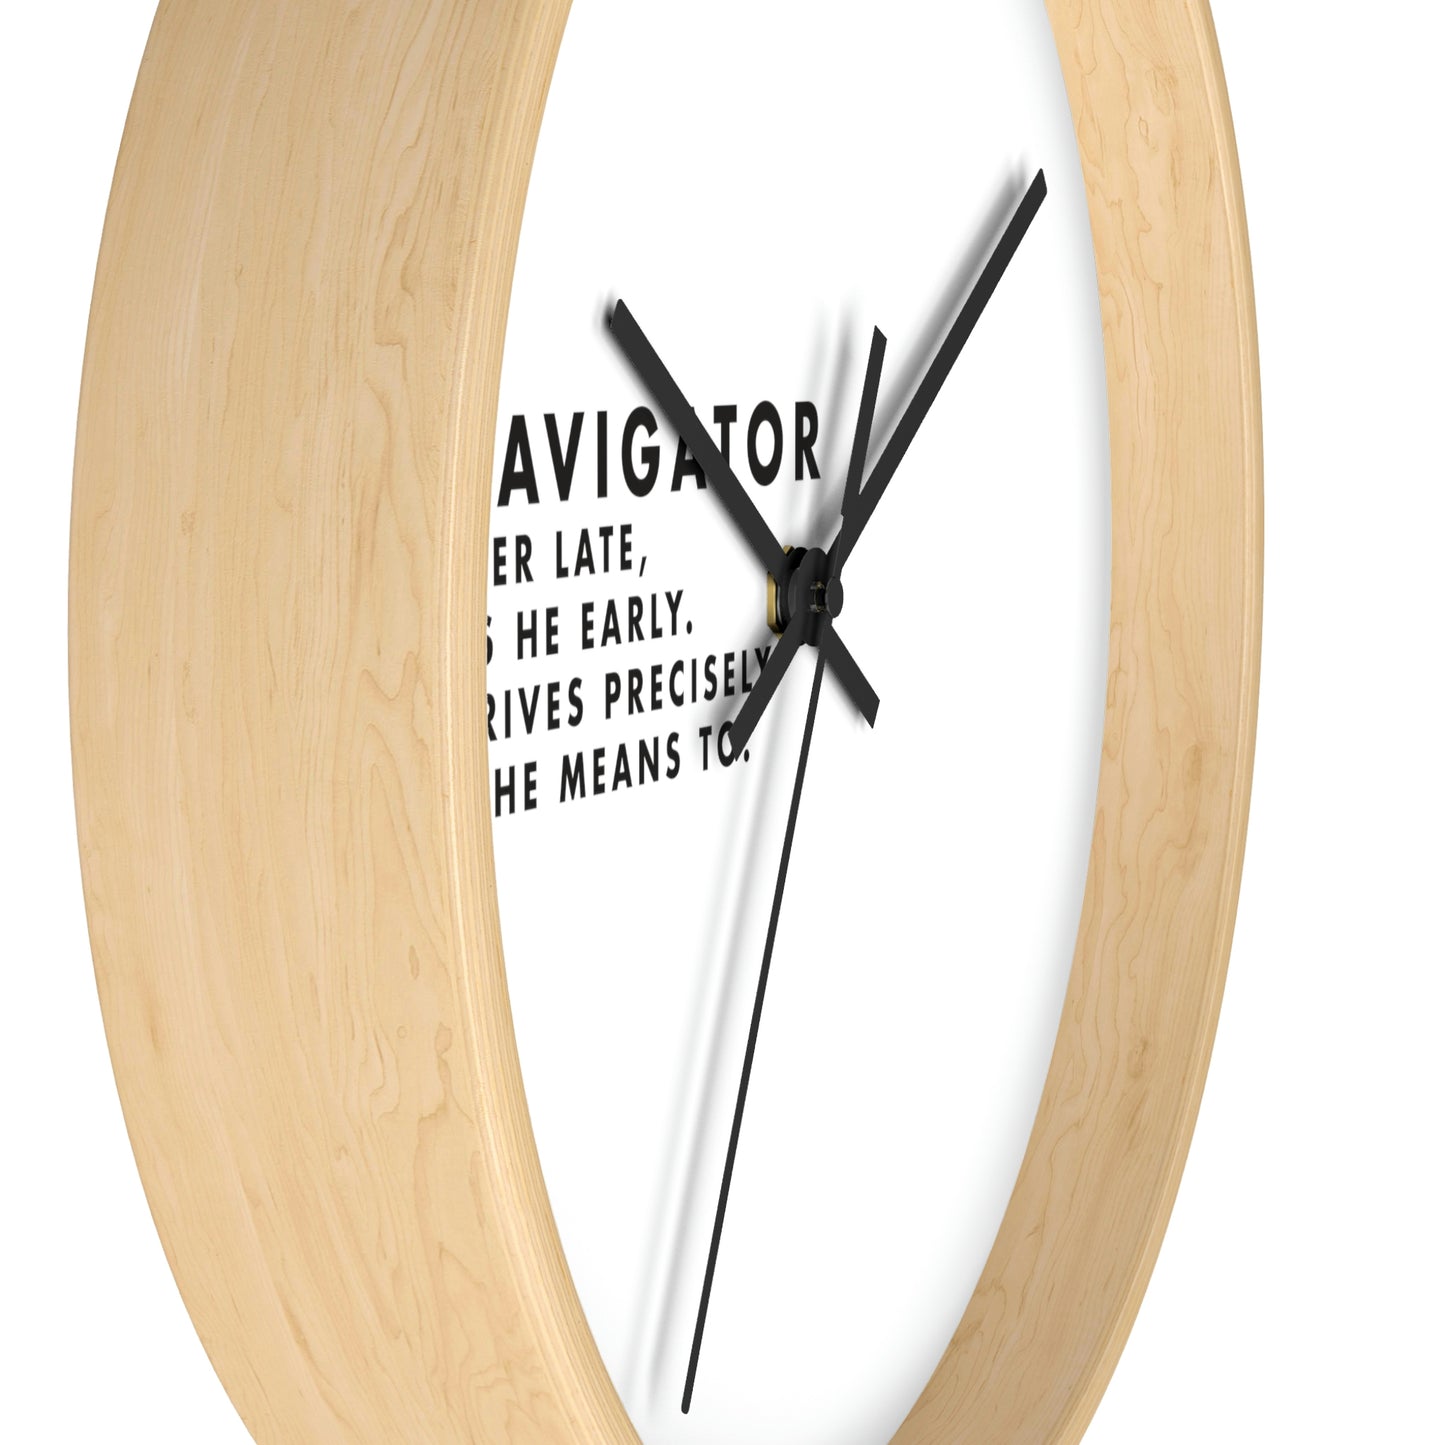 Navigator Wall clock